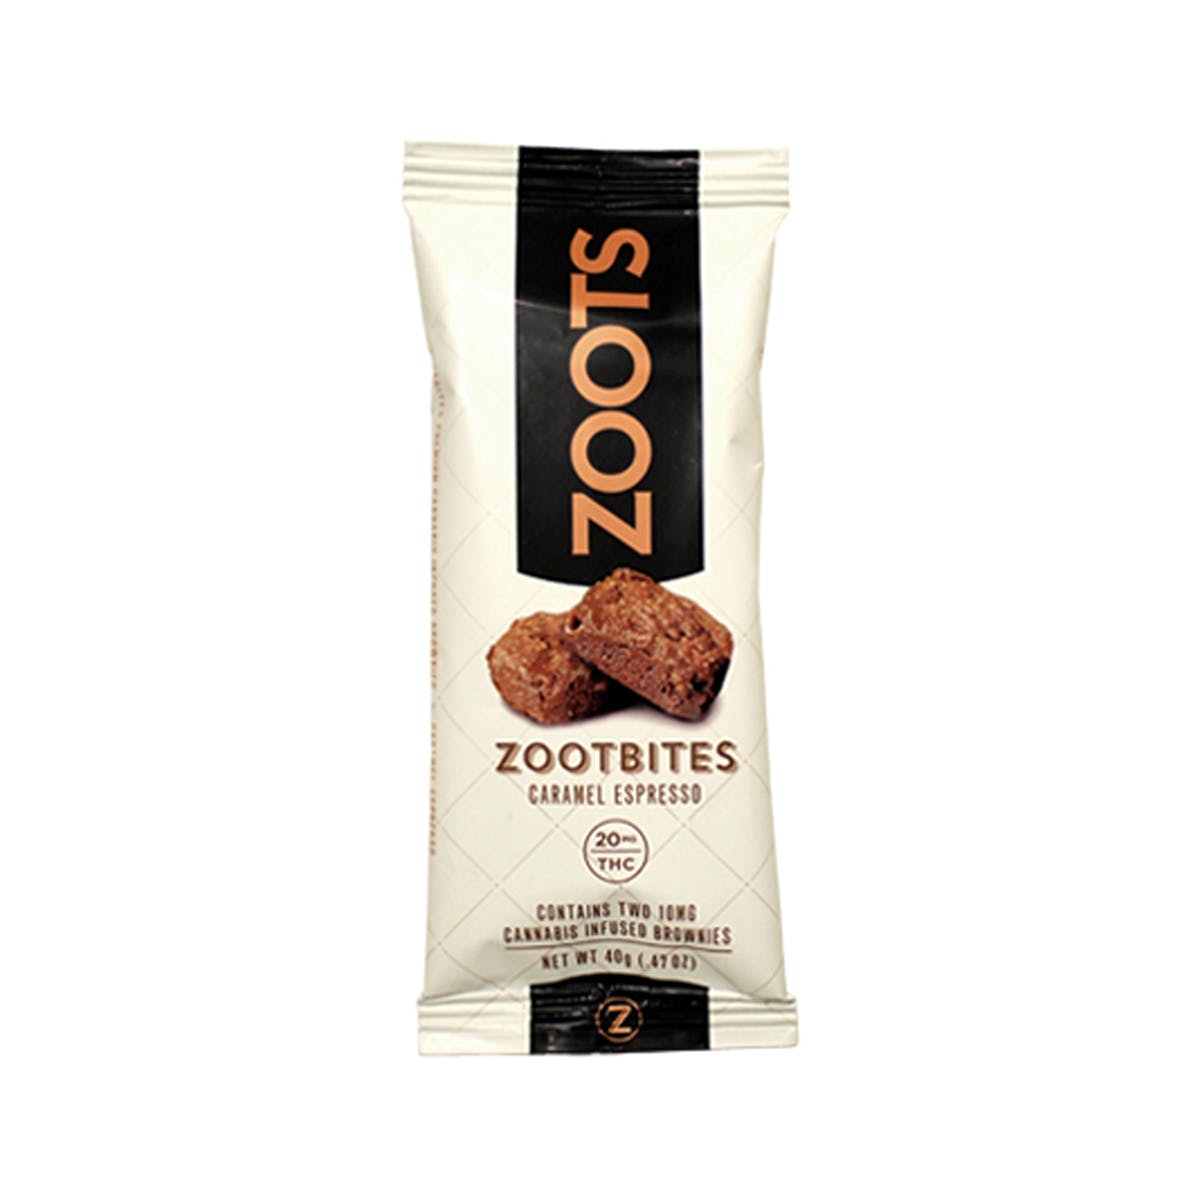 edible-zoots-zootbites-caramel-espresso-brownies-20mg-2pk